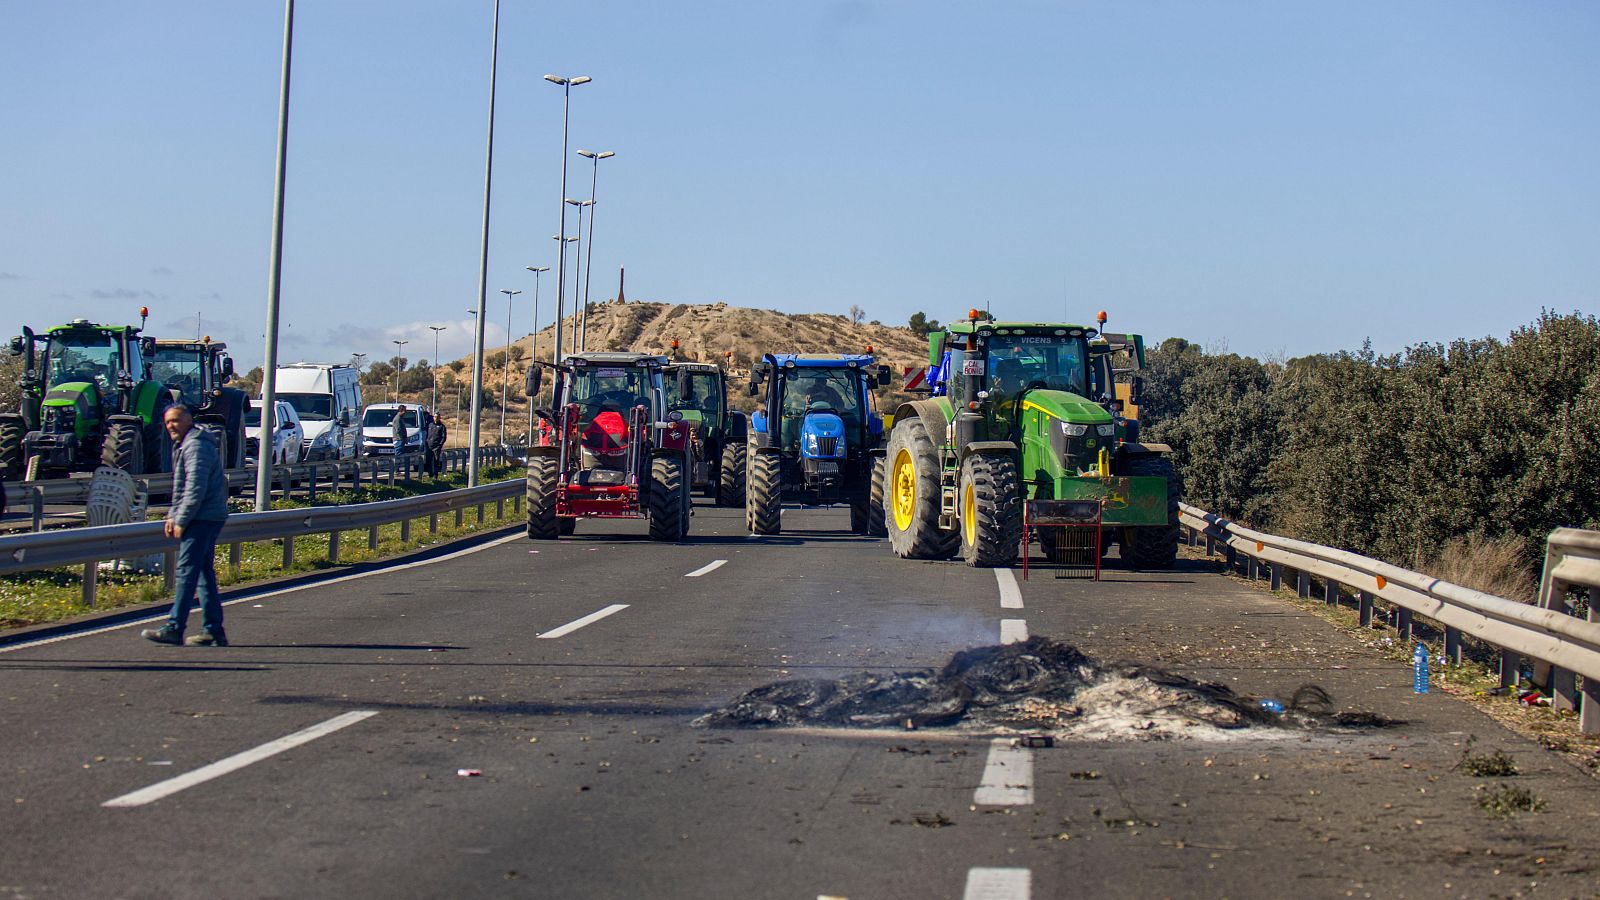 Se cumplen cuatro semanas de protestas agrarias en España